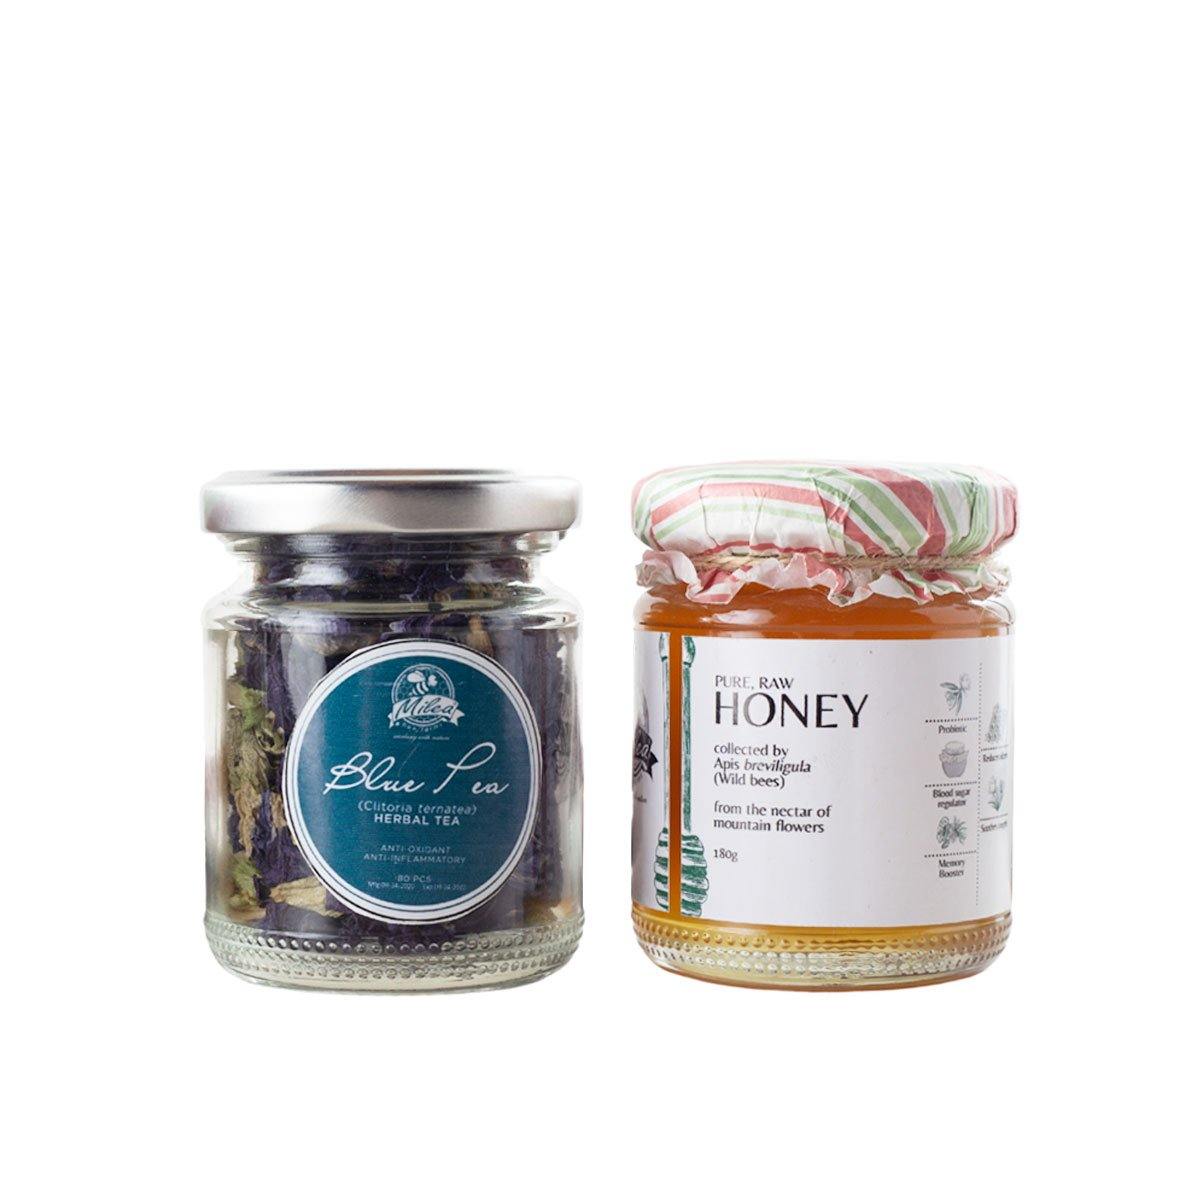 Herbal Pantry (Honey & Tea Gift Collection) - Milea All Organics - Philippines